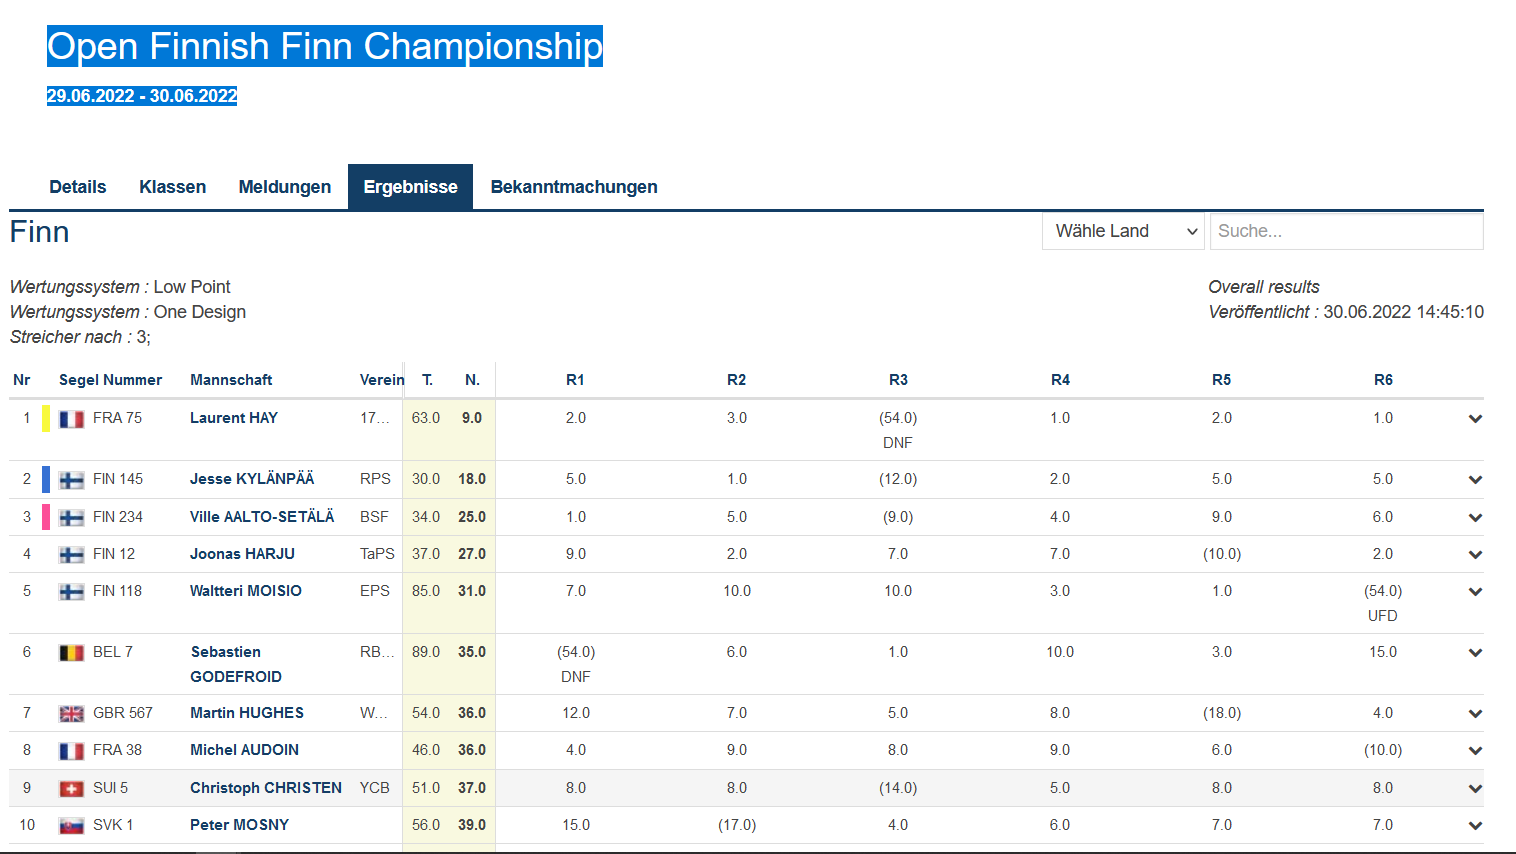 Open Finnish Finn Championship 29.06.2022 – 30.06.2022